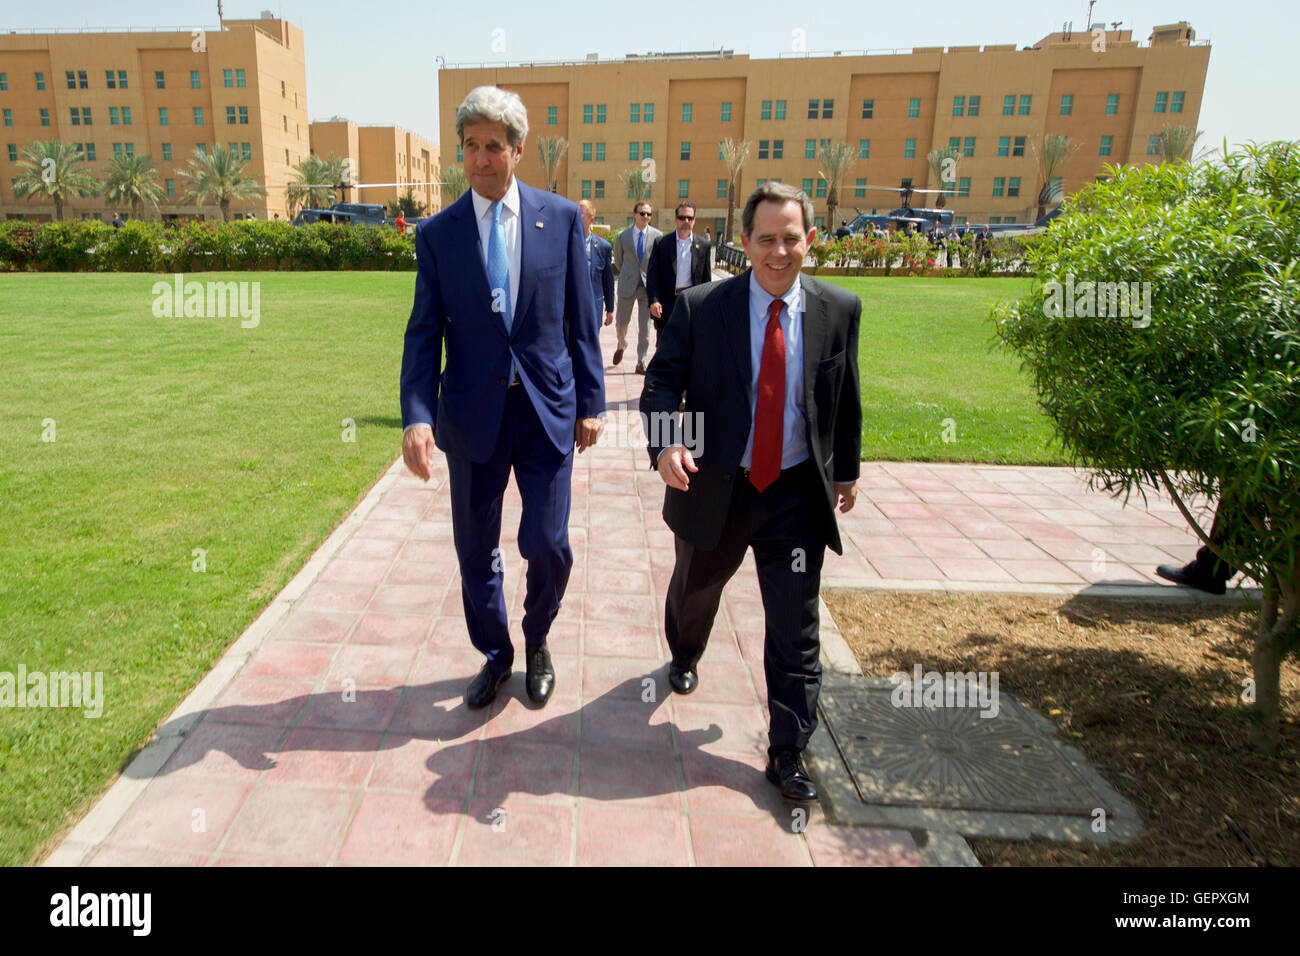 Secretary Kerry Walks With U.S. Ambassador to Iraq Jones Before Meetings With Iraqi Leaders in Baghdad Stock Photo